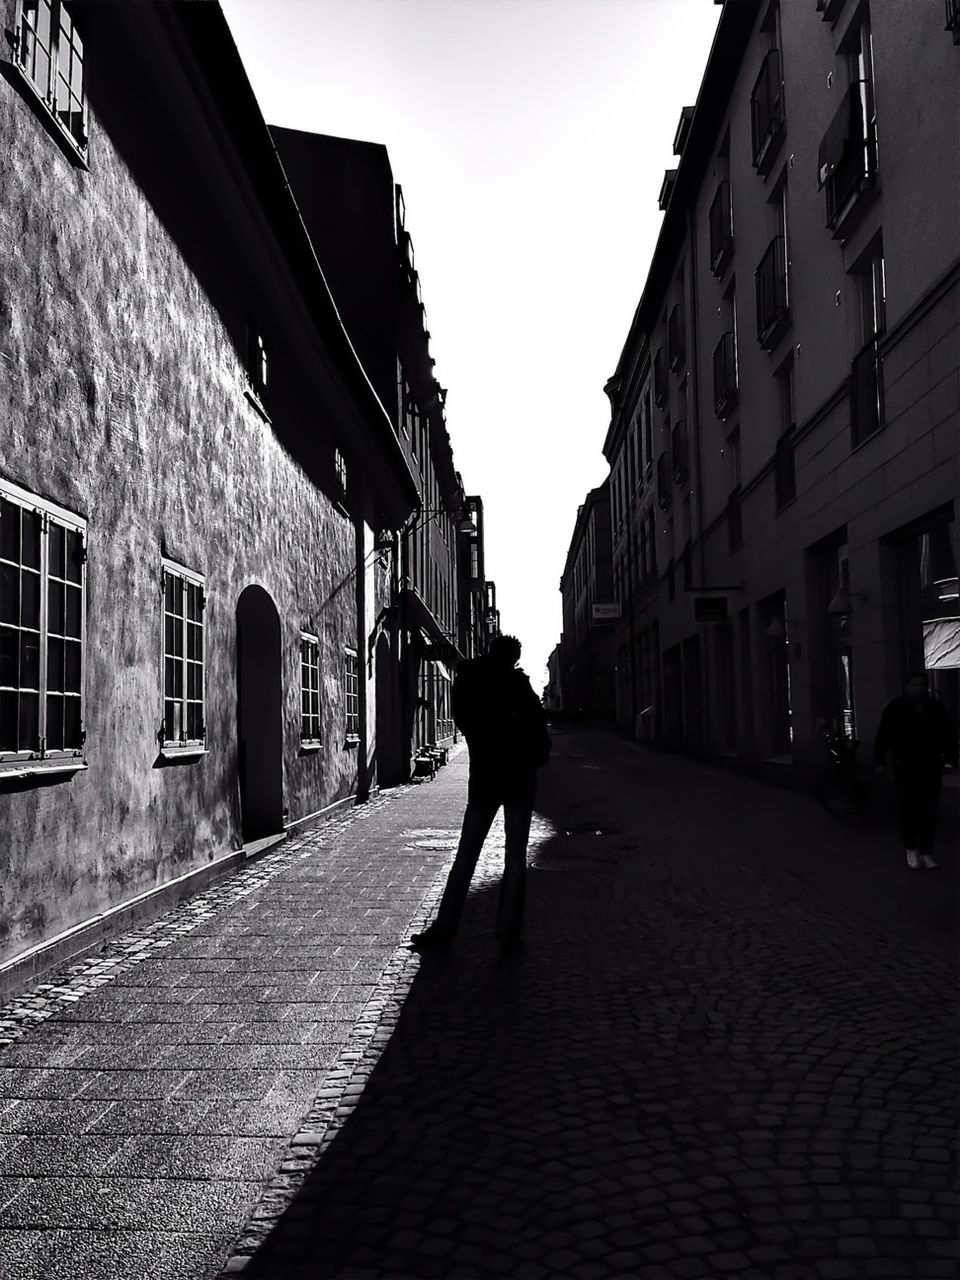 Silhouette man standing on street